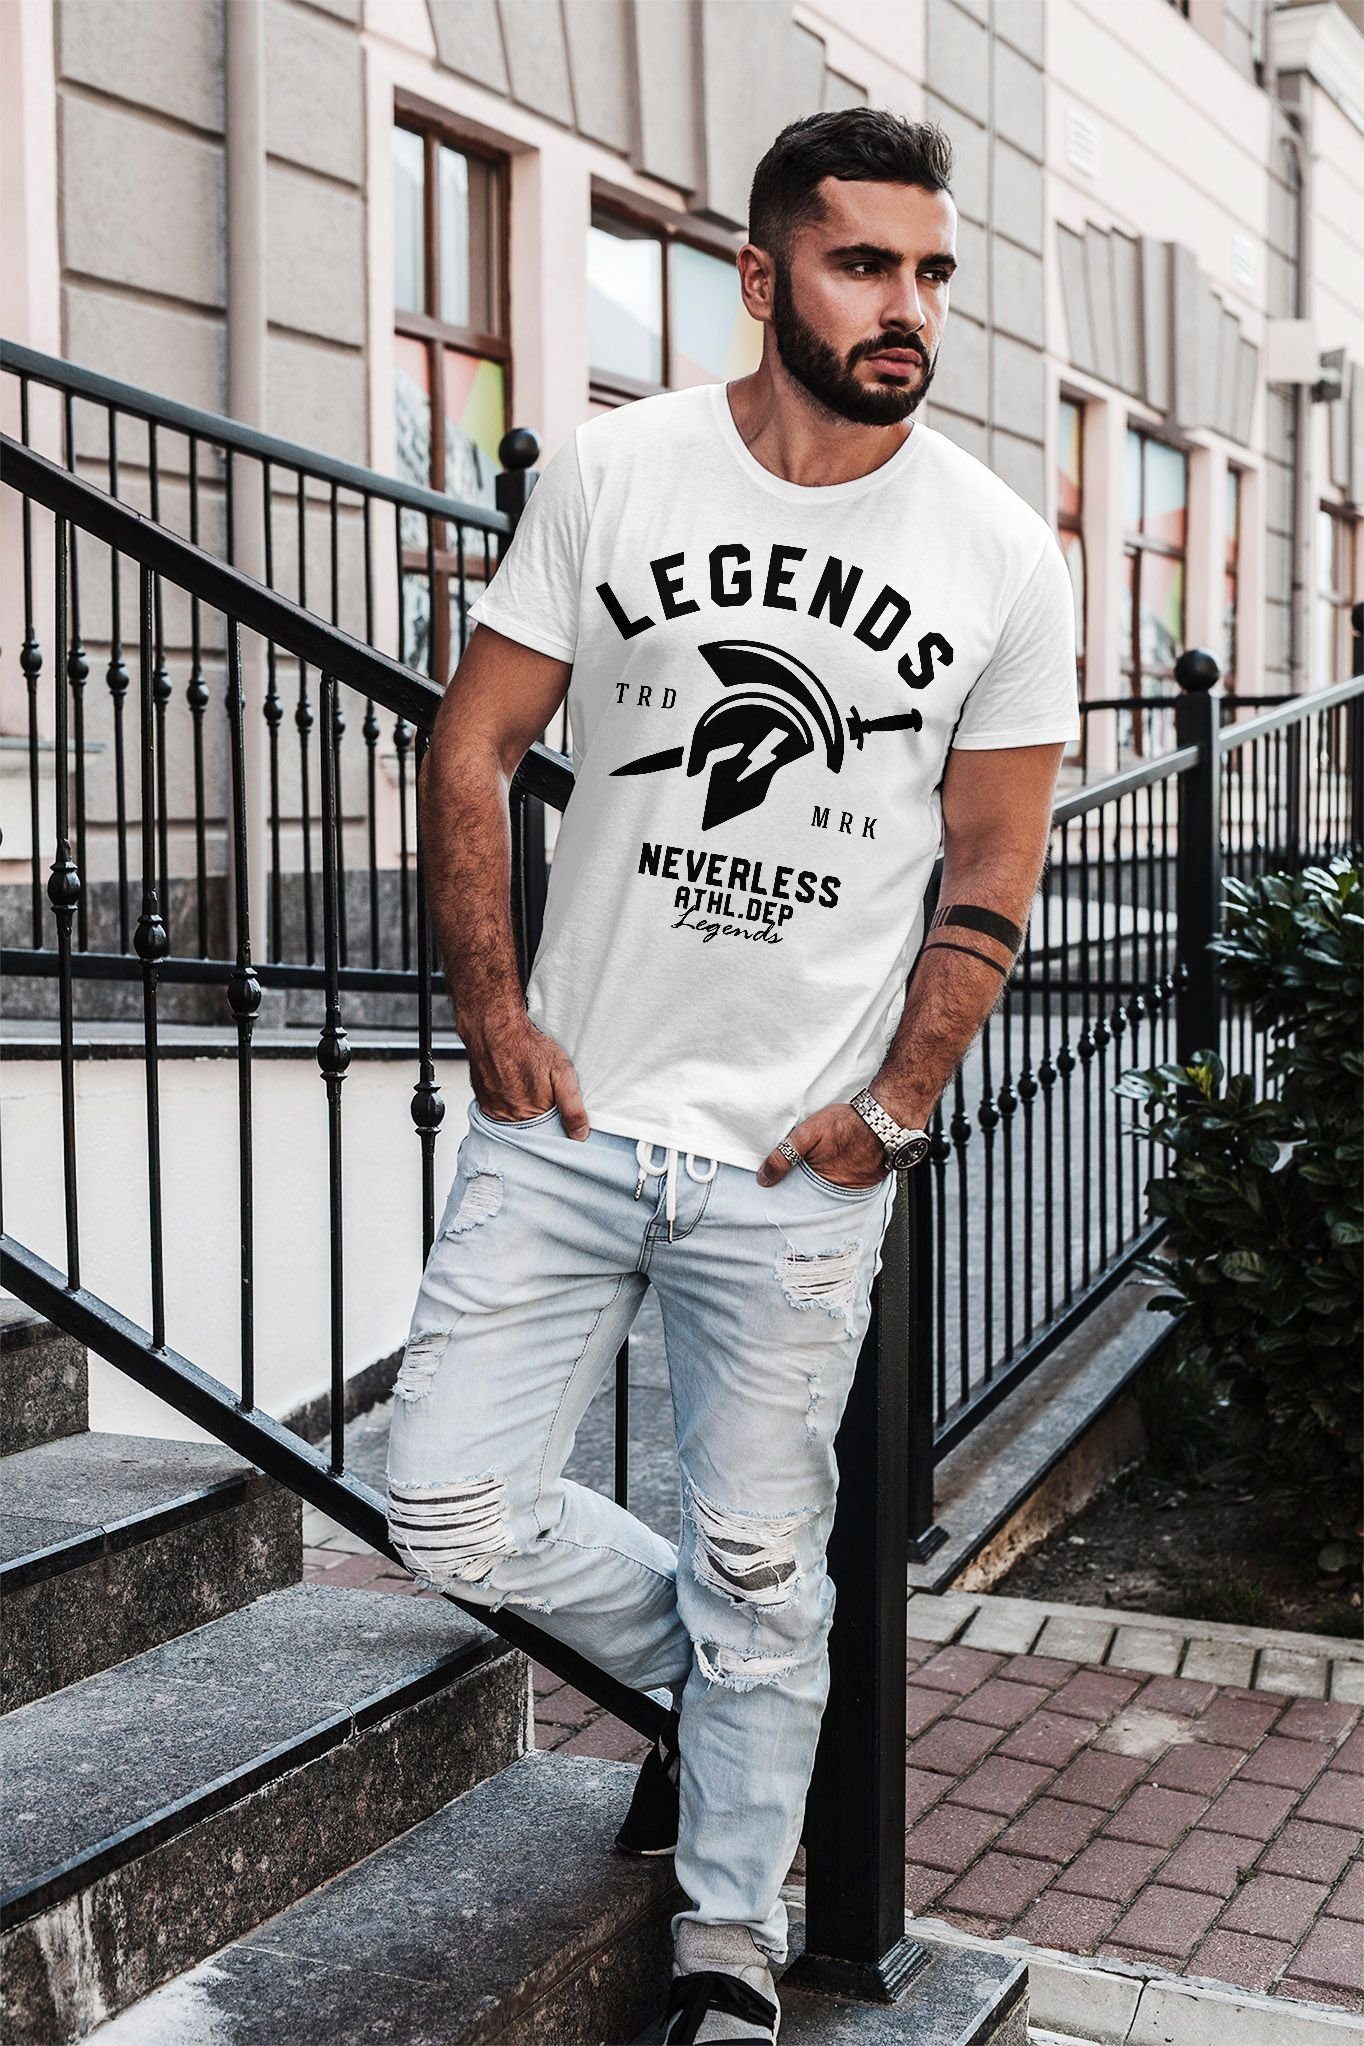 Sparta Herren Neverless® Fitness Gym Sport Cooles weiß T-Shirt Print-Shirt Gladiator Athletics Print Legends Neverless mit